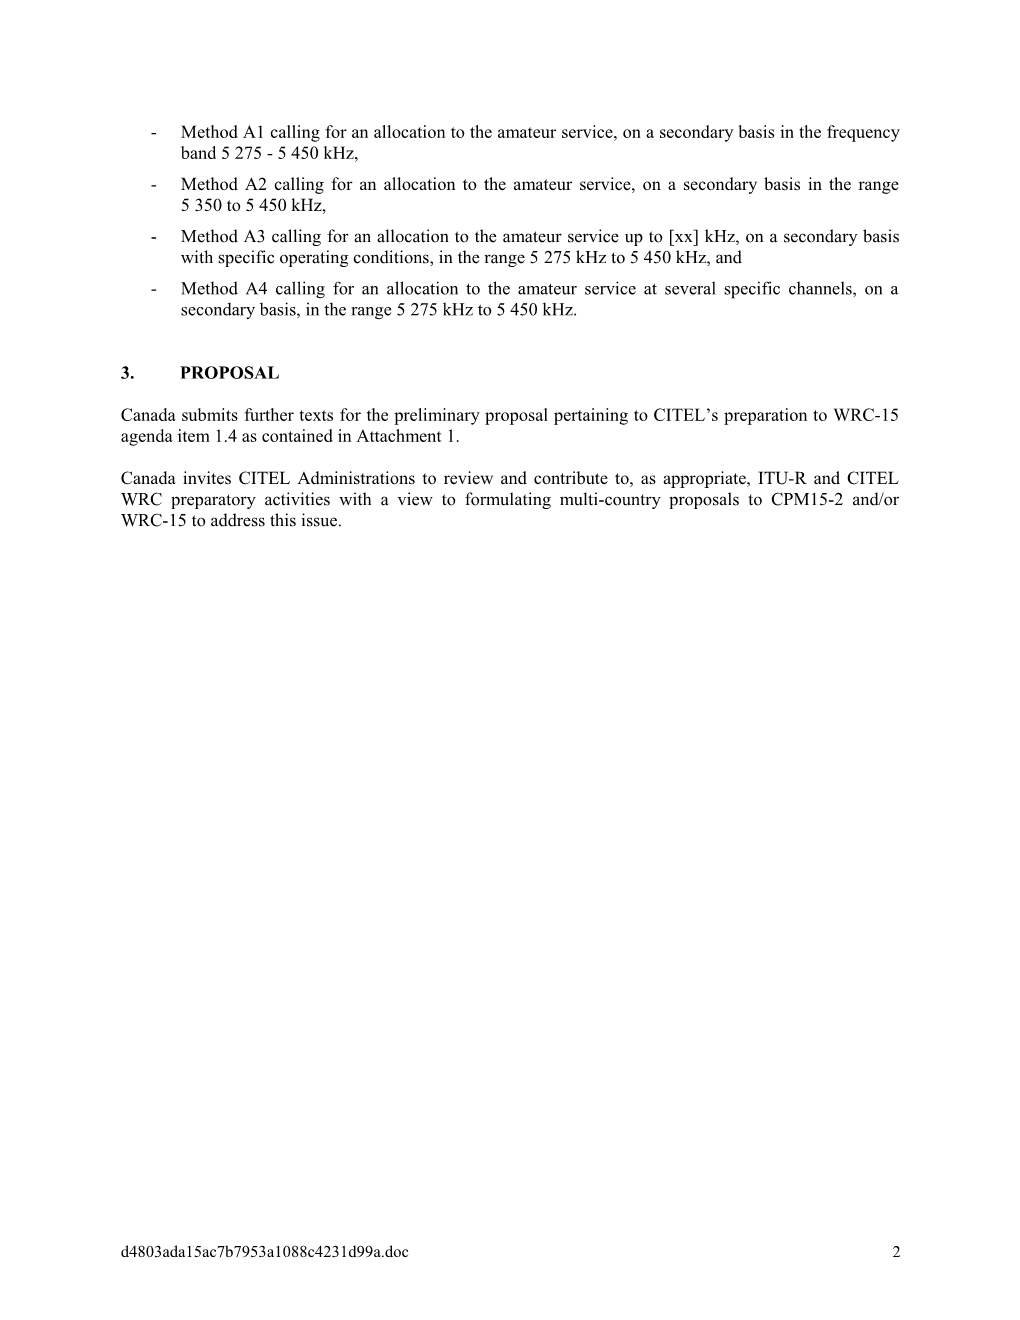 Agenda Item 1.4 Preliminary Proposal for Wrc-15